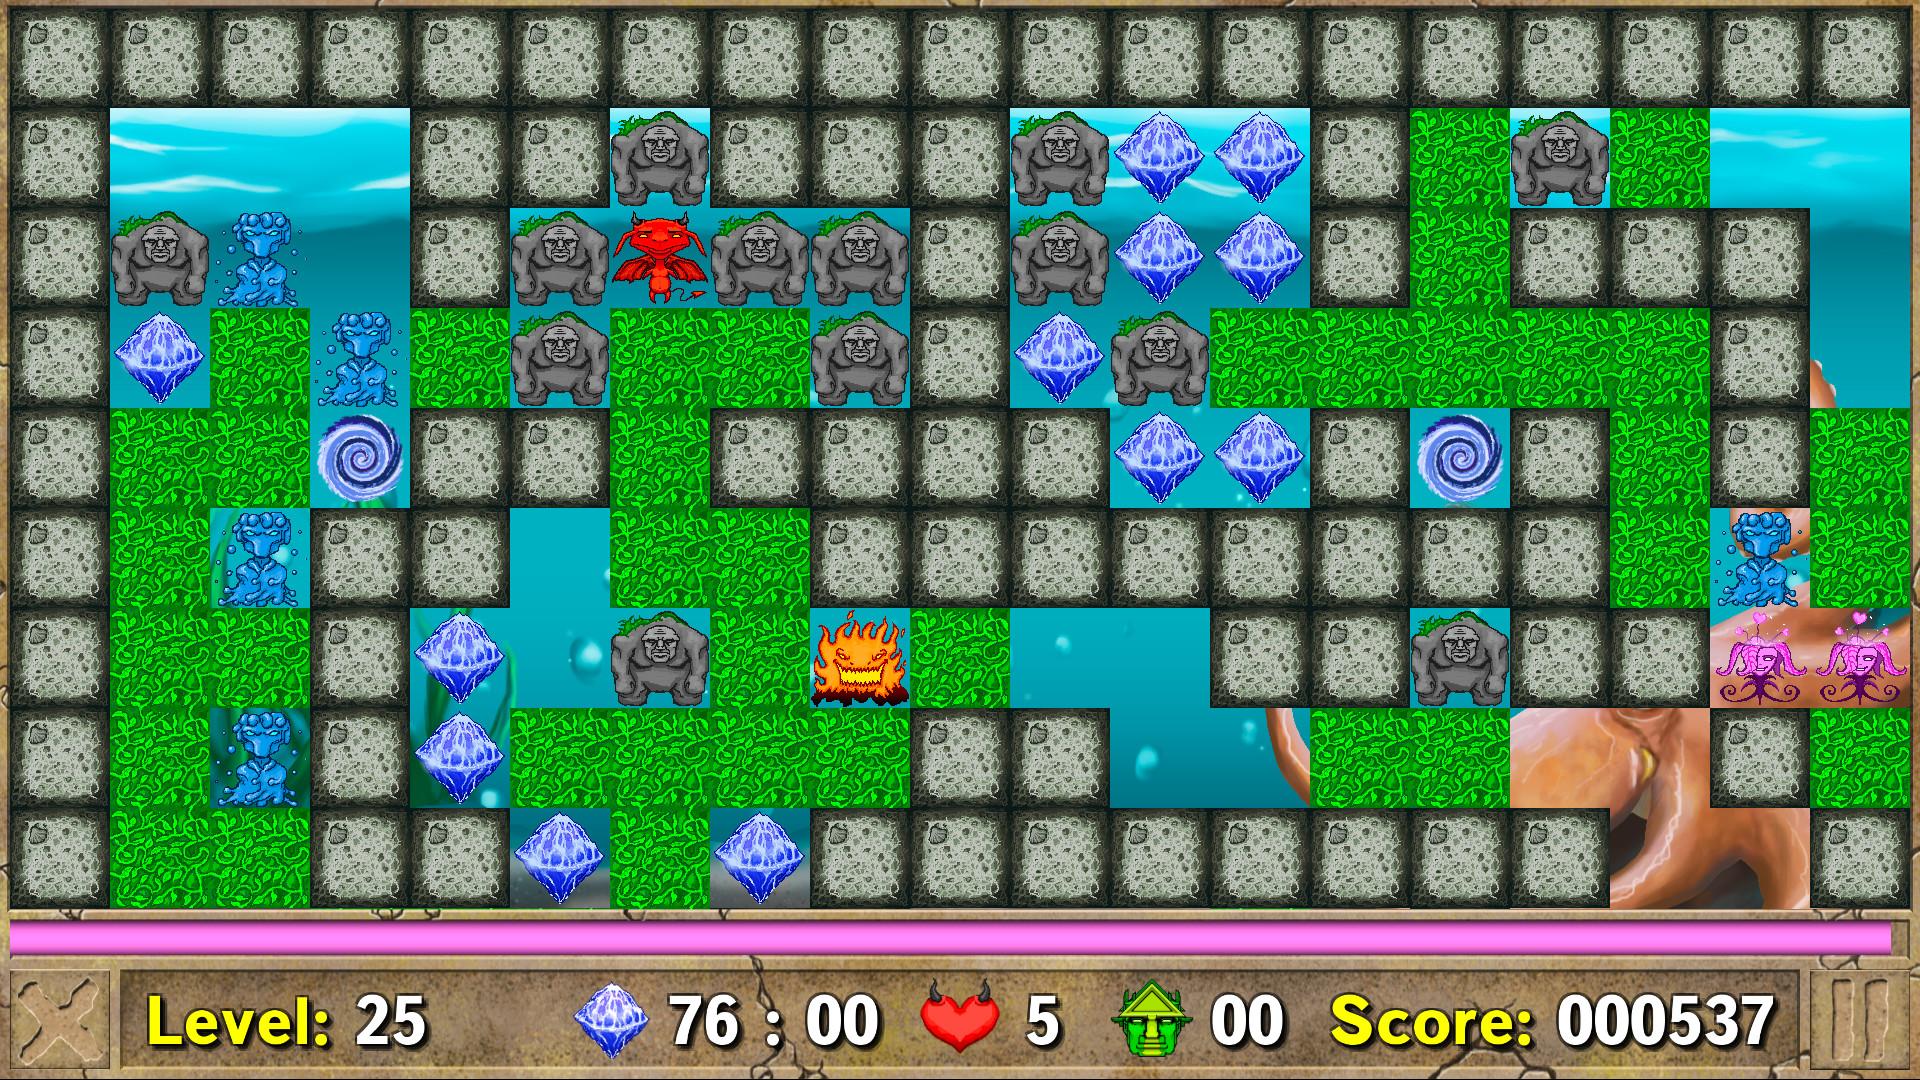 Screenshot №7 from game Elems